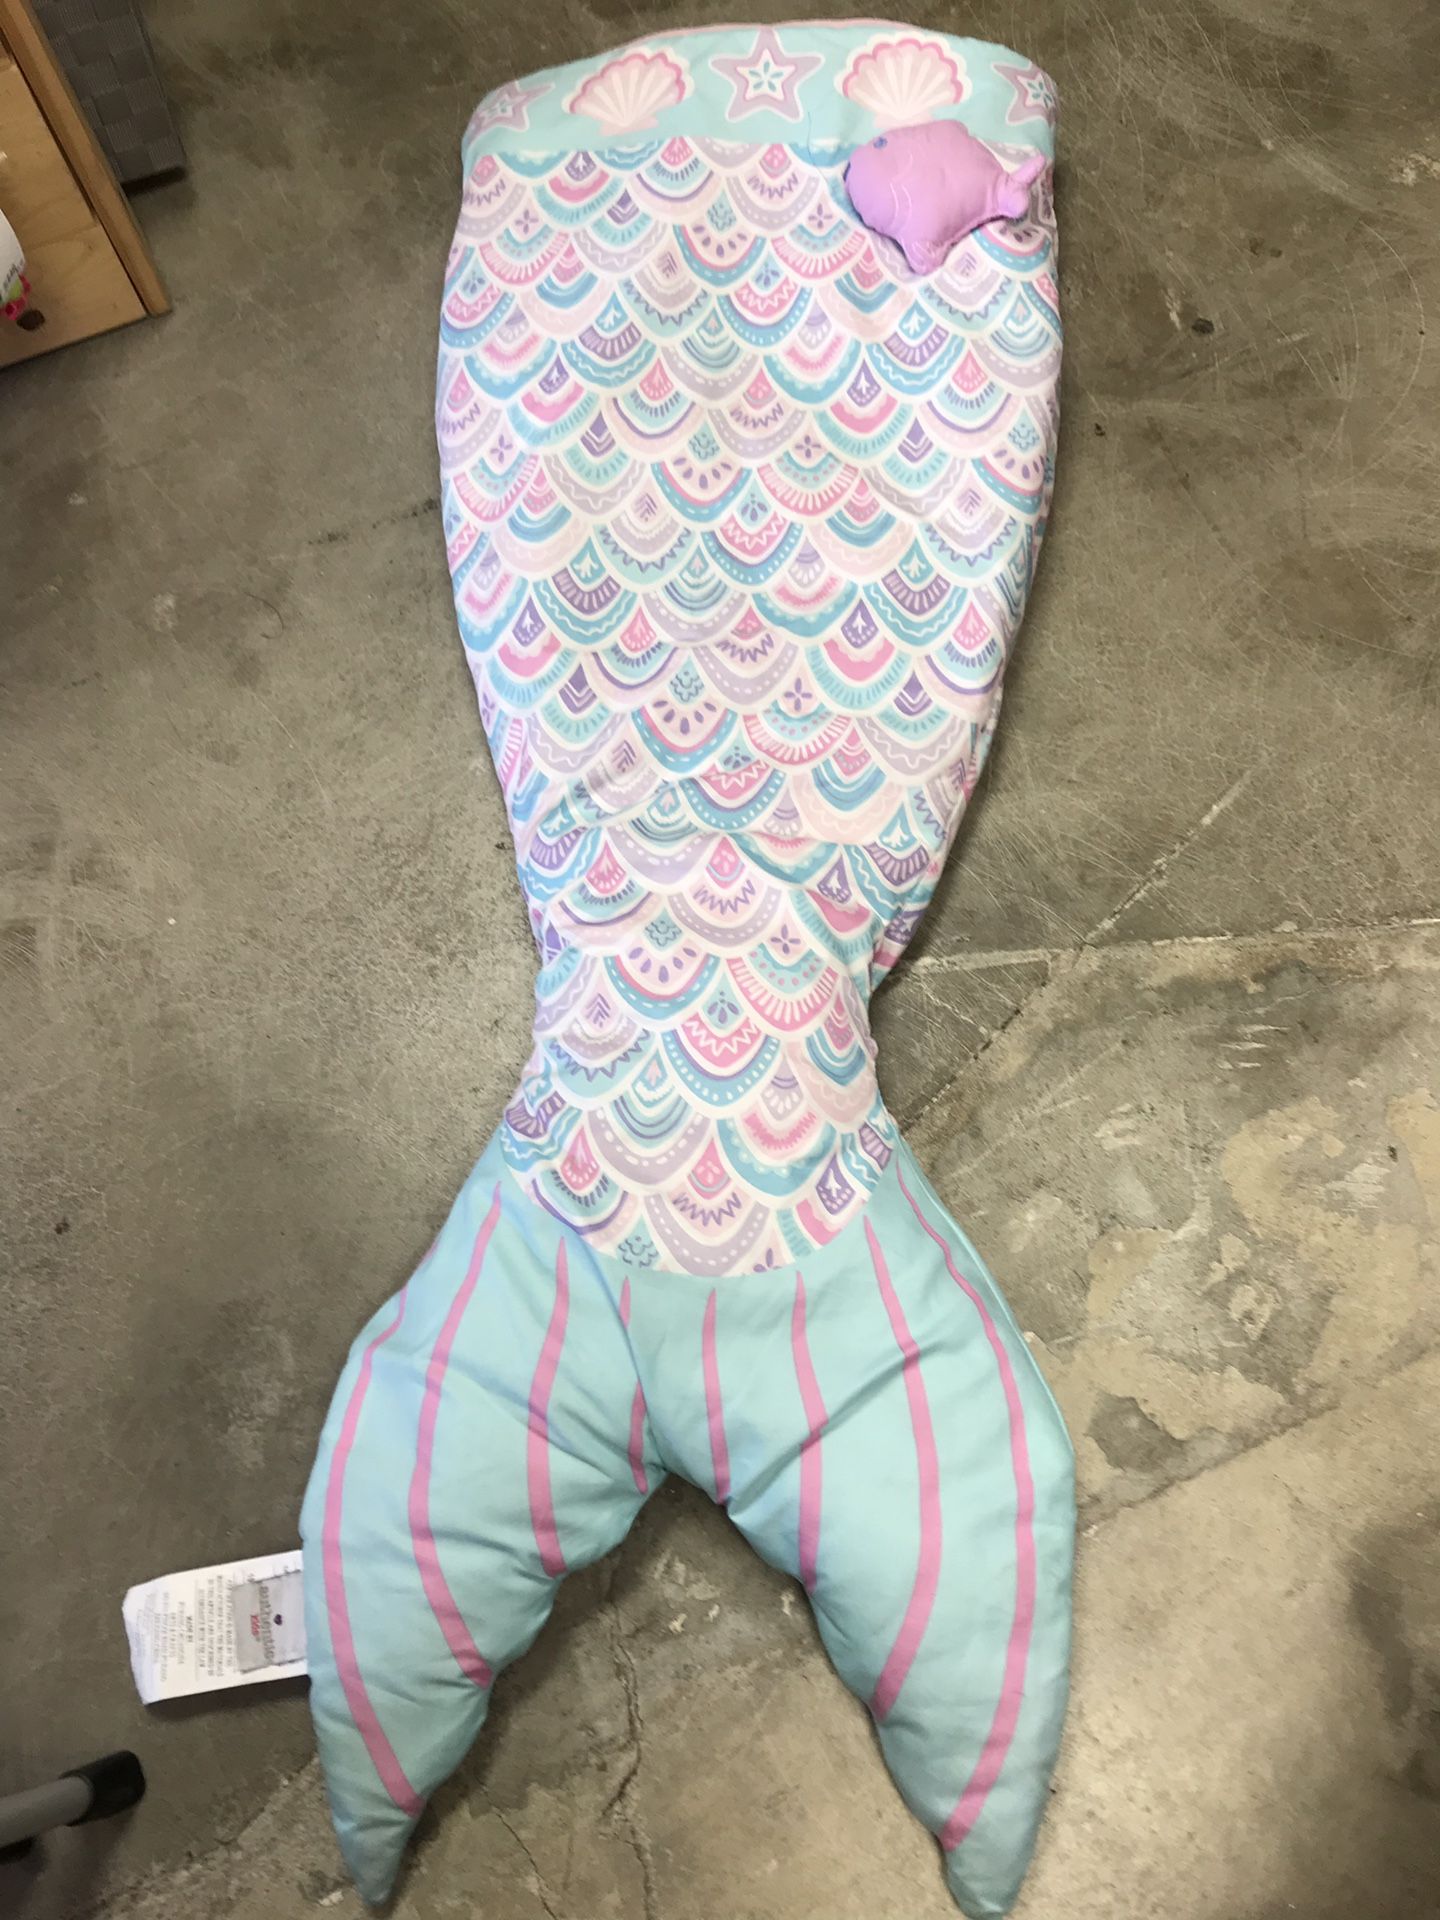 Mermaid tail snuggle blanket plush 23” x 57” authentic kids